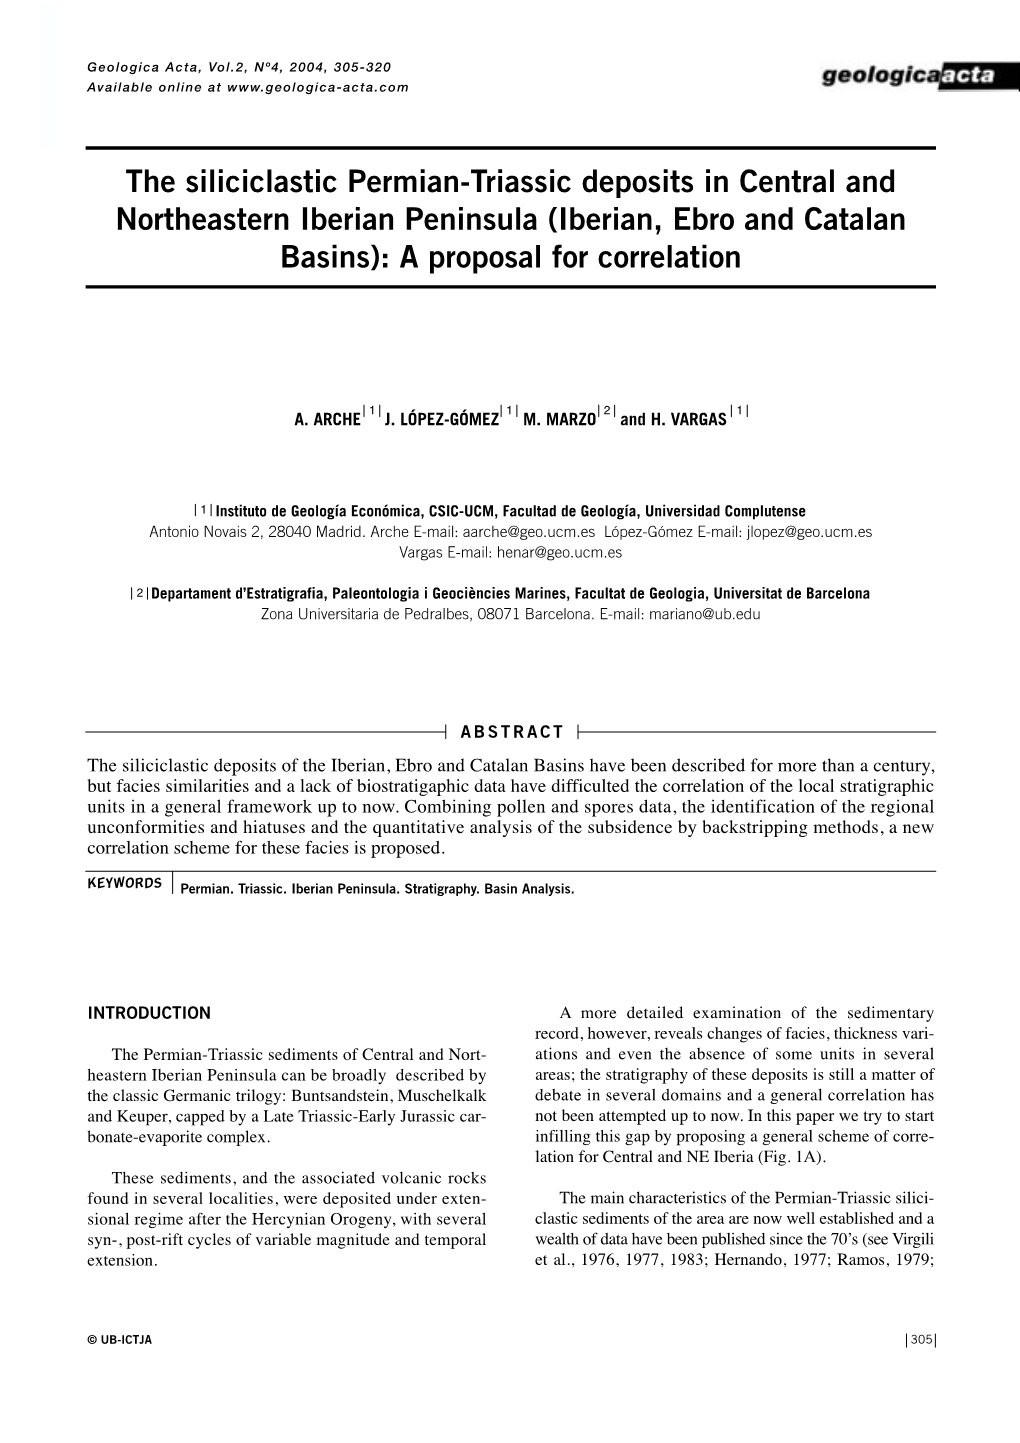 (Iberian, Ebro and Catalan Basins): a Proposal for Correlation